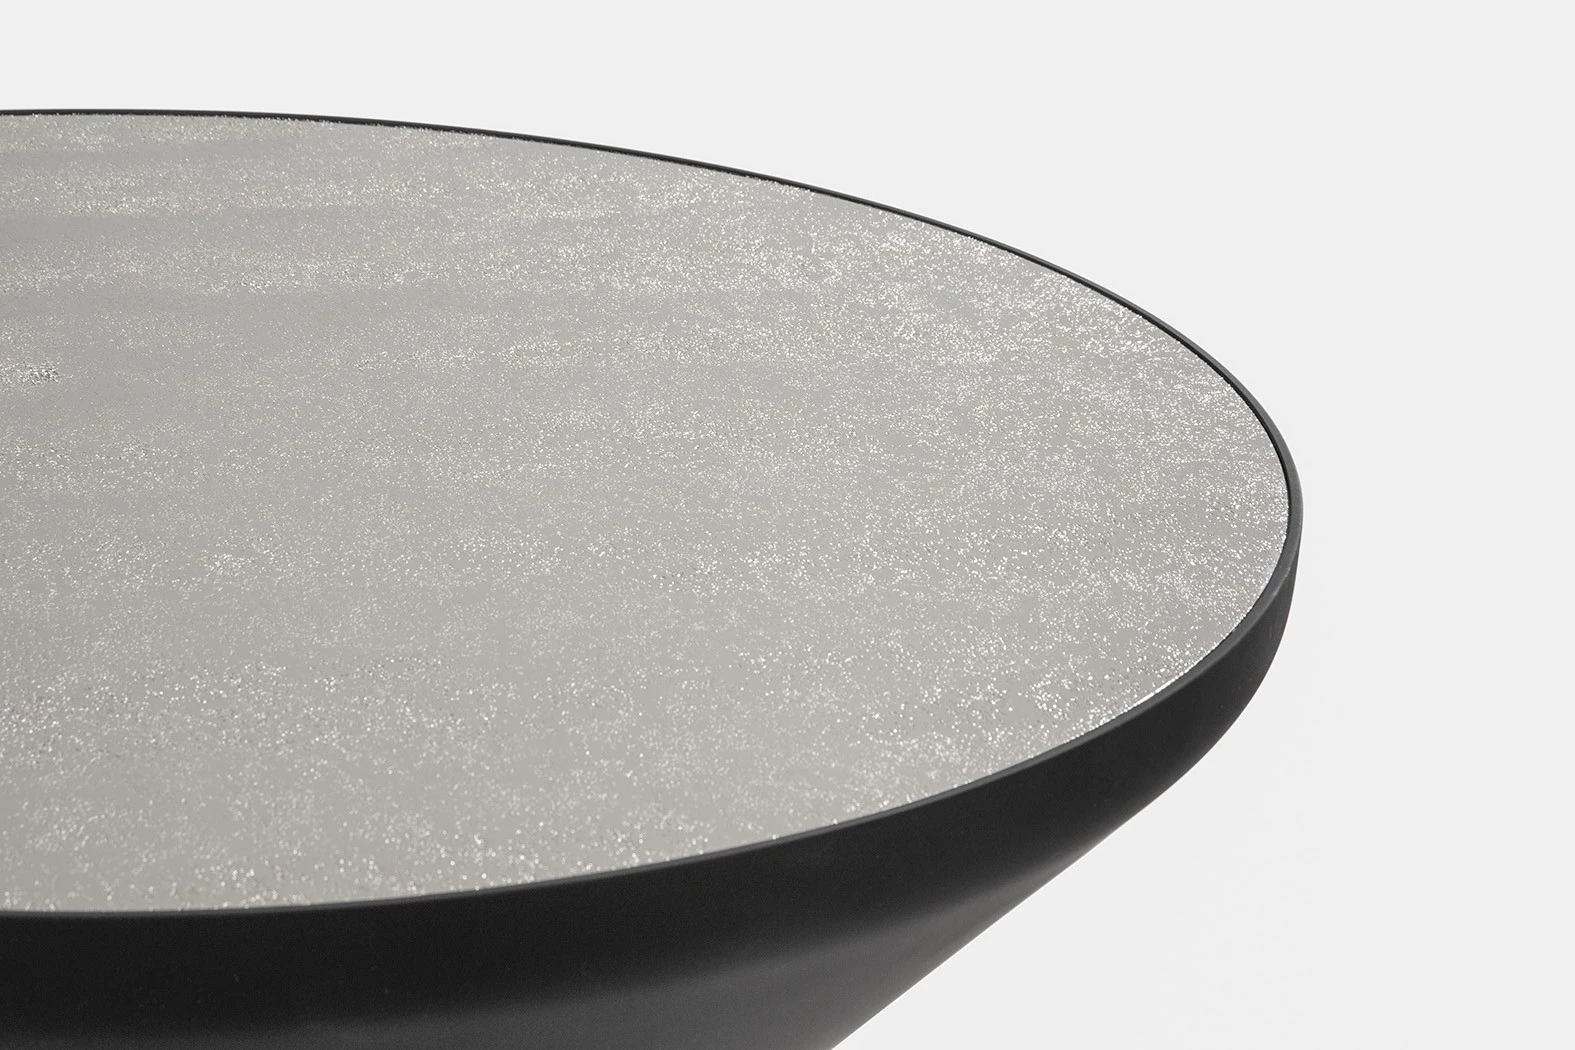 Comet round coffee table - Jean-Baptiste Fastrez - Coffee table - Galerie kreo